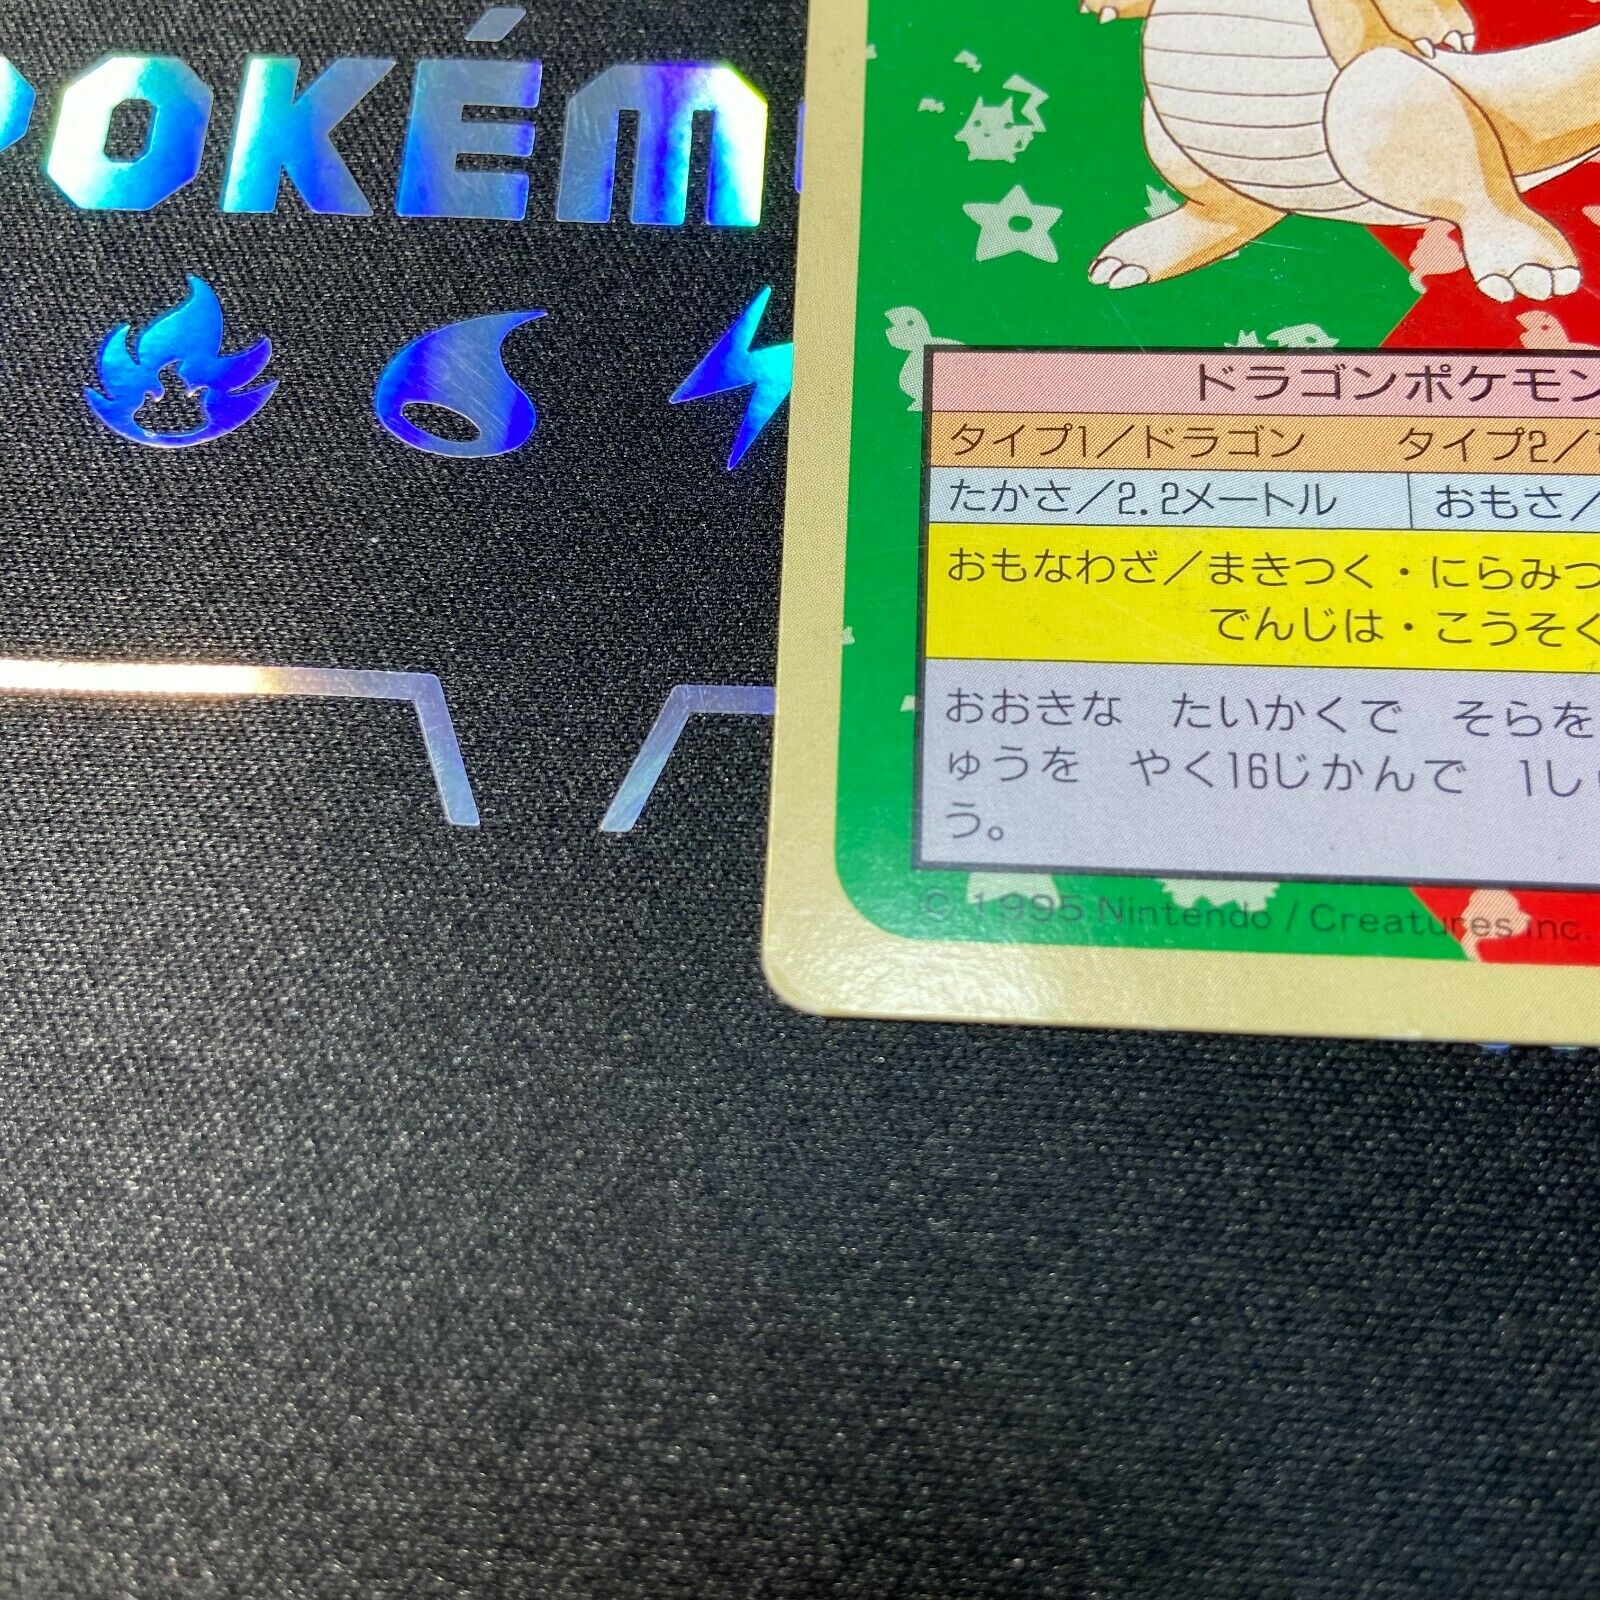 Dragonite 149 Topsun Pokemon Card Green Back Japanese Nintendo 1995 Limited - Image 5